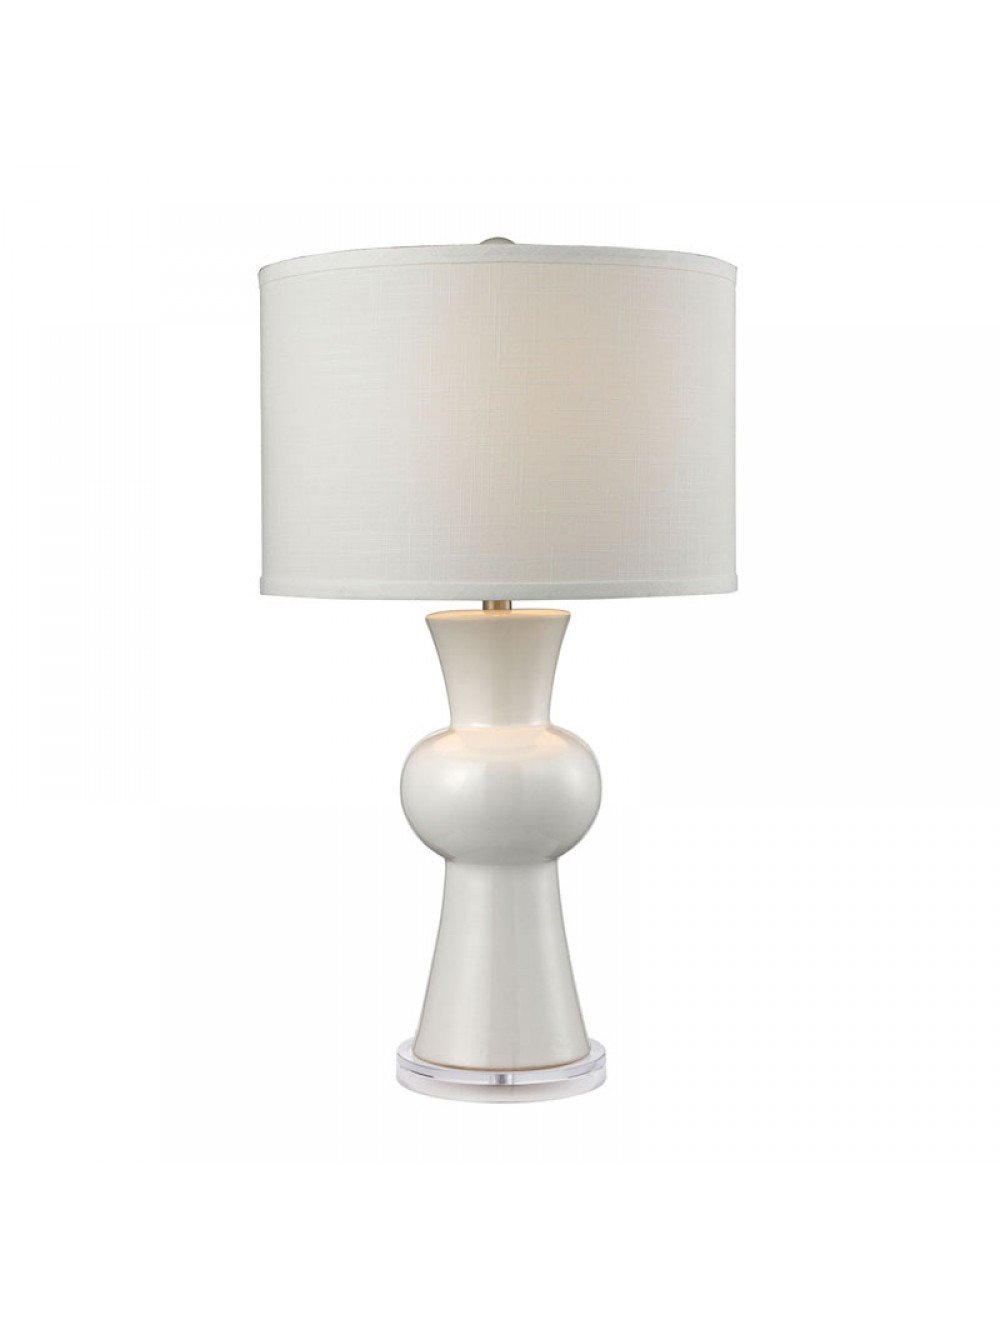 CERTO TABLE LAMP - Image 0